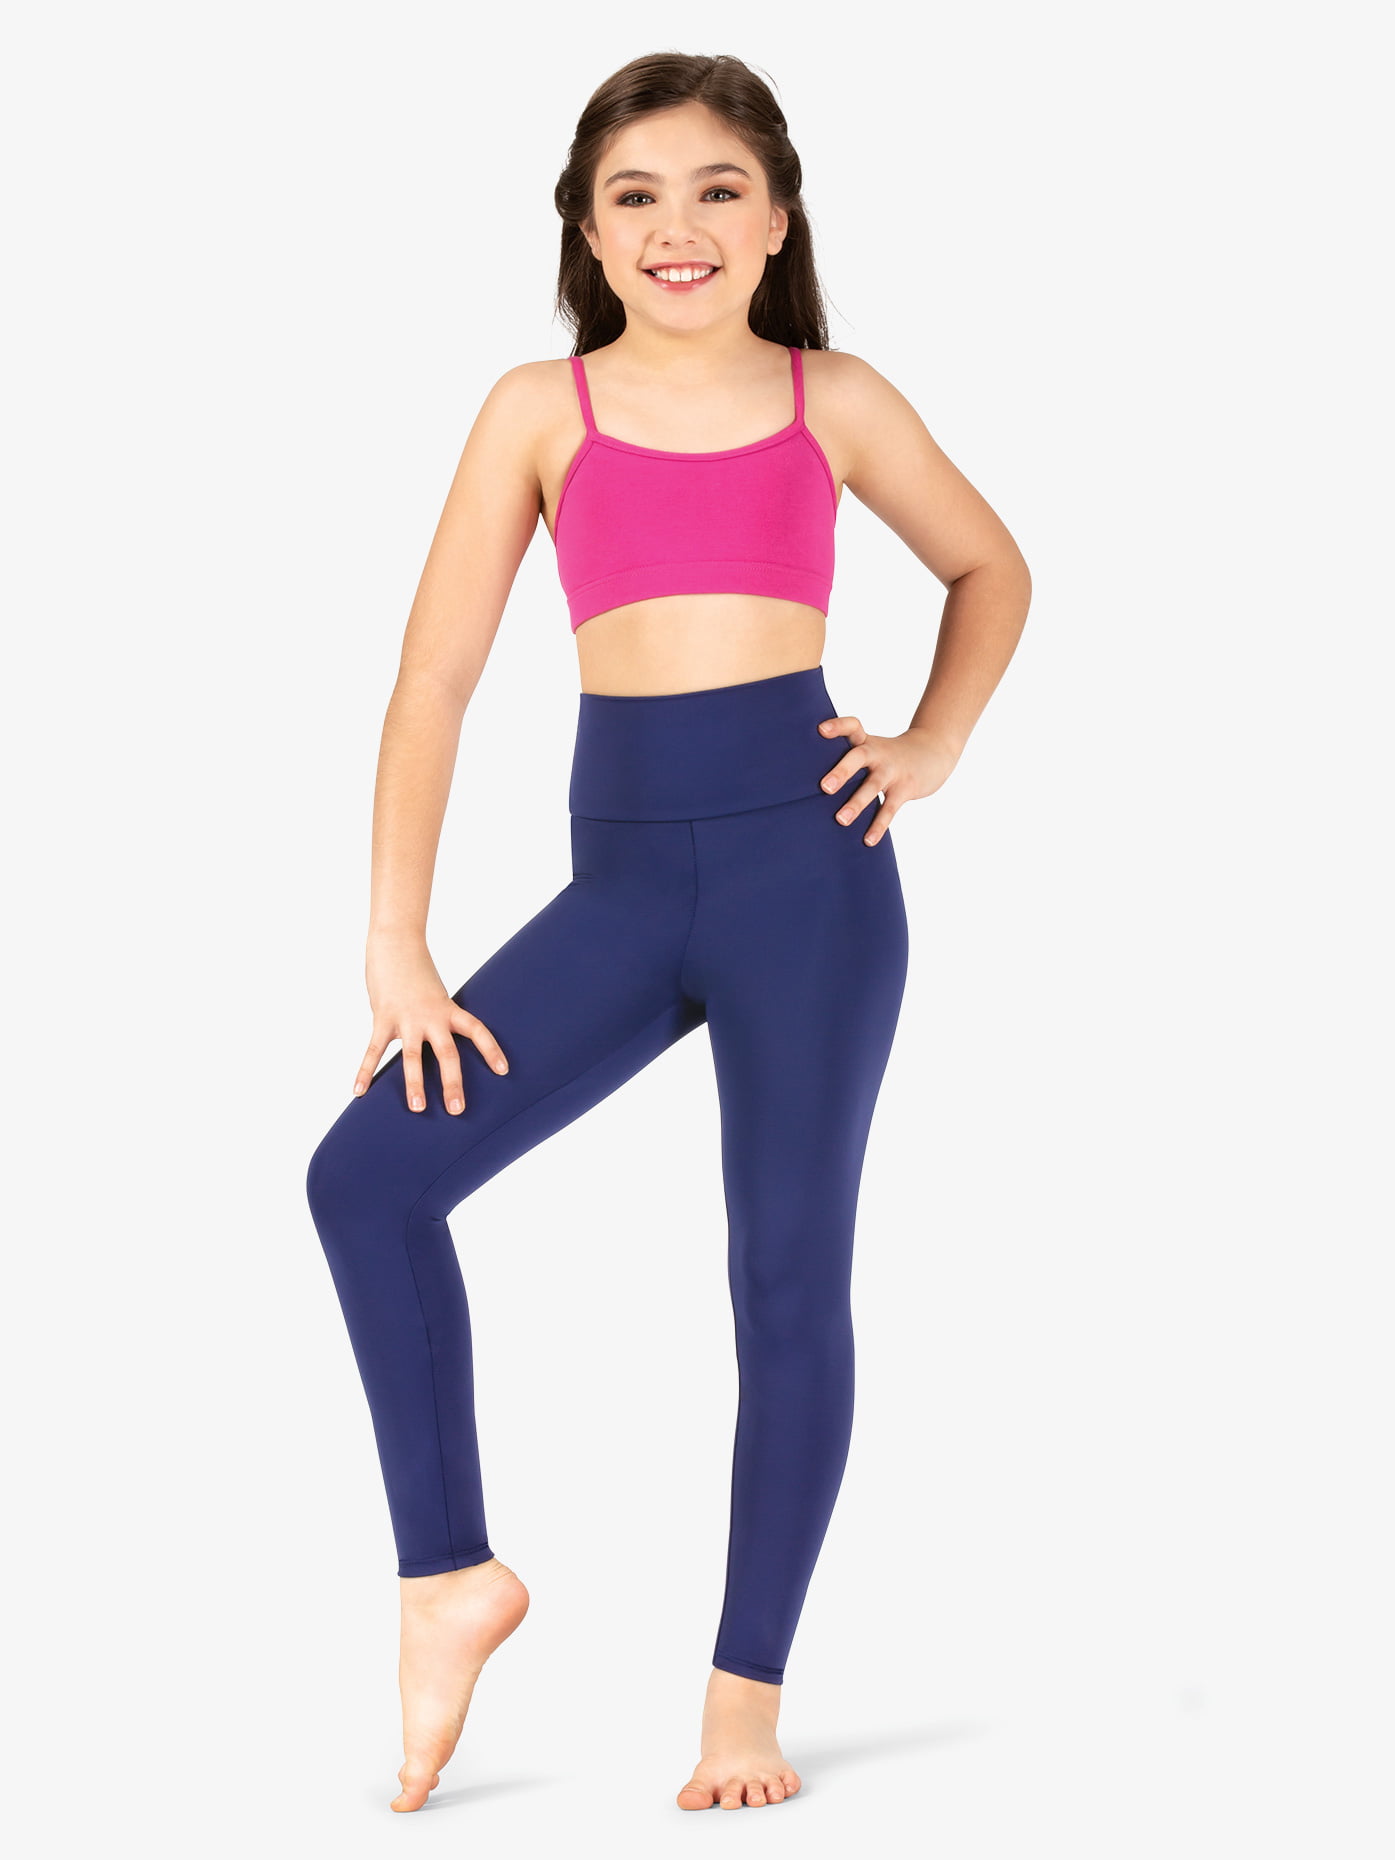 Girls Shiny Metallic Full Length Active Wear Gym Workout Yoga Dance Leggings 